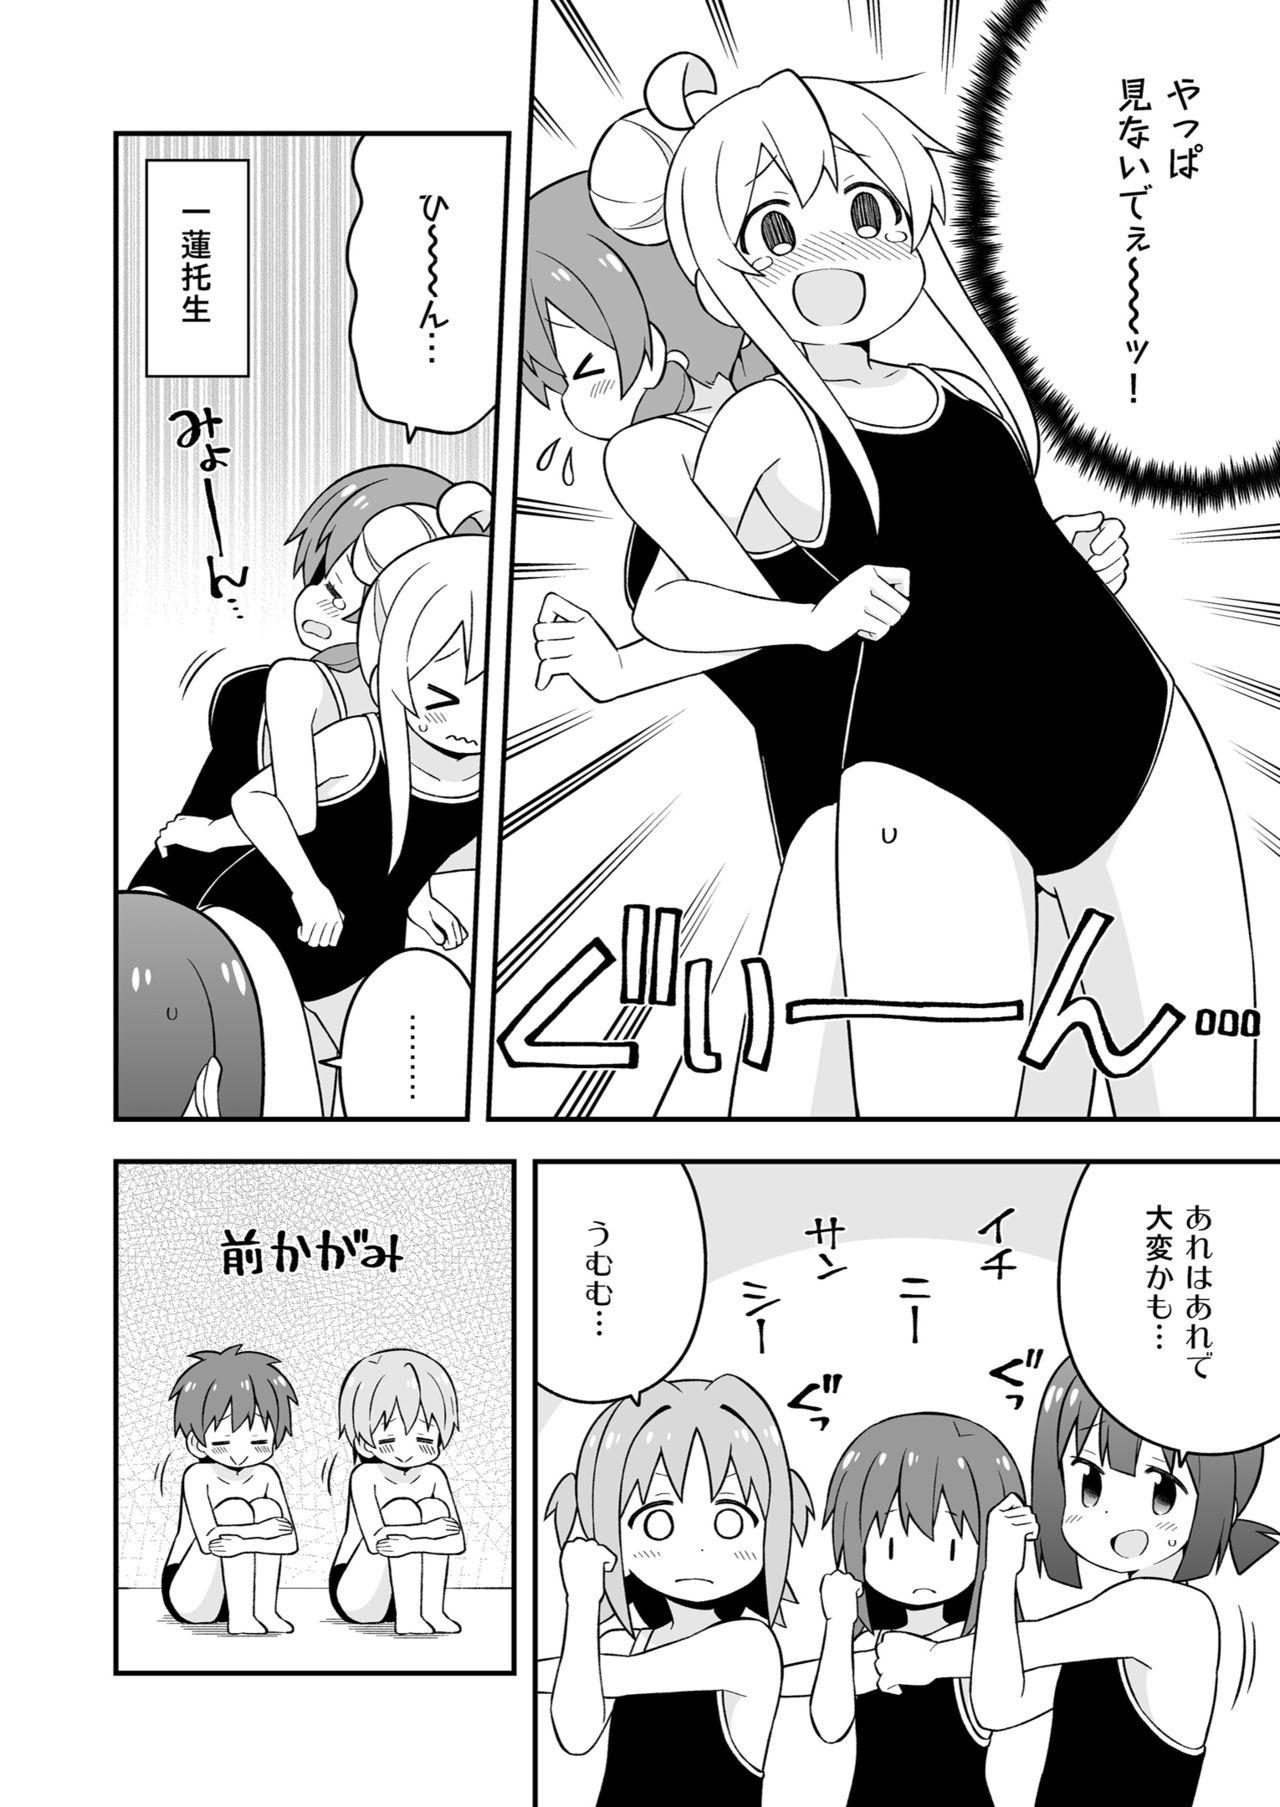 Lady Onii-chan wa Oshimai! 17 Real - Page 10